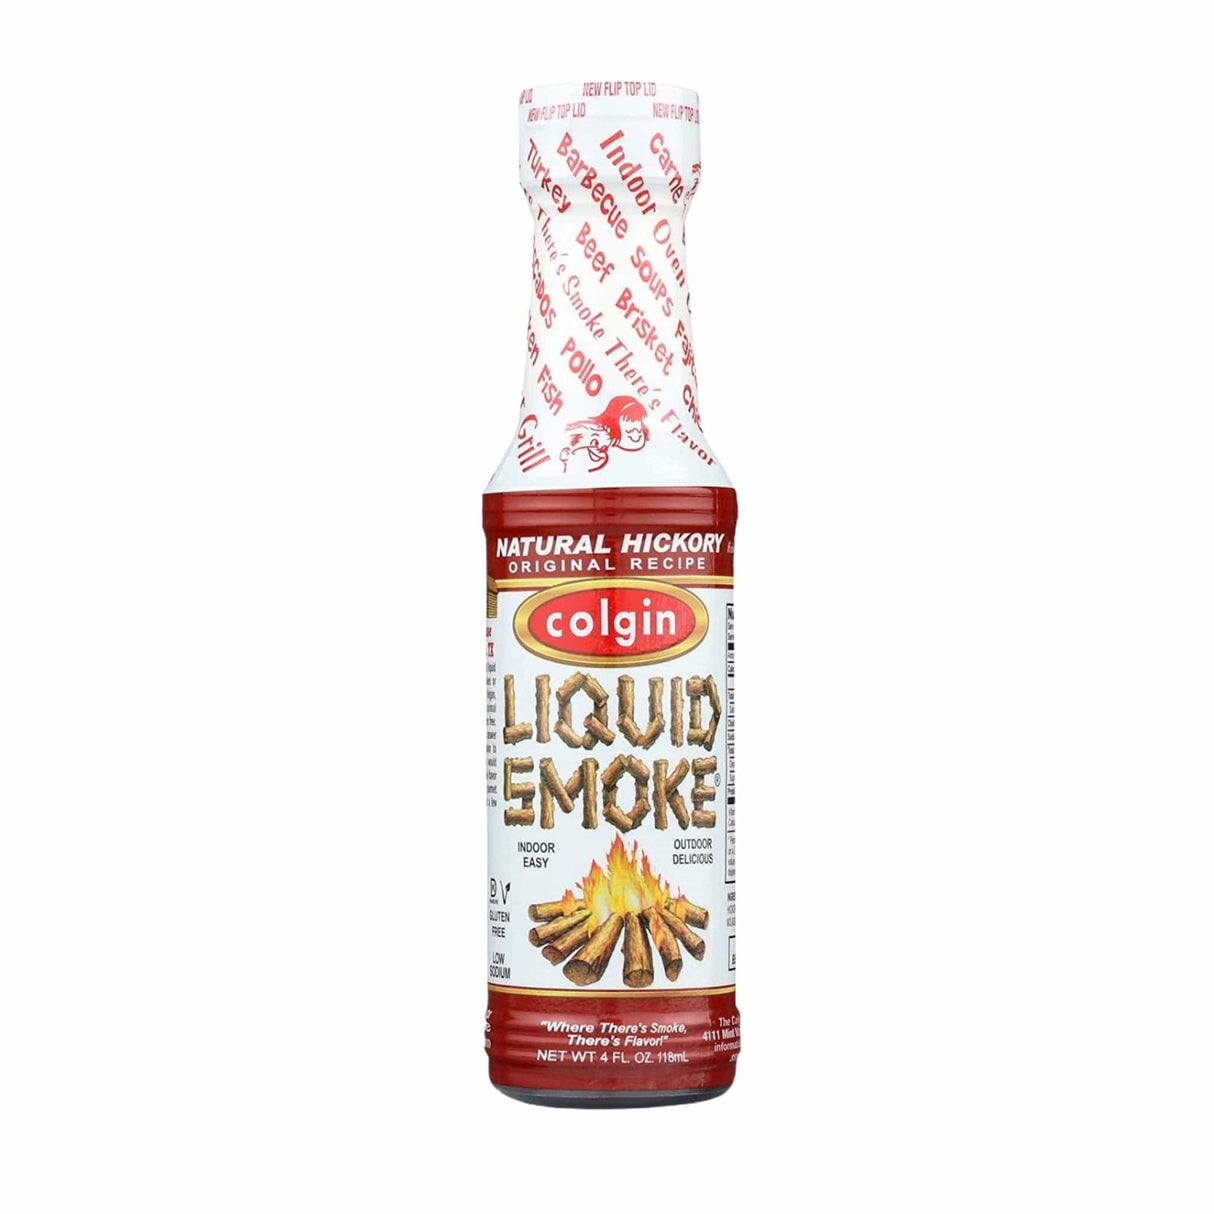 Colgin Liquid Smoke Natural Hickory - hot sauce market & more